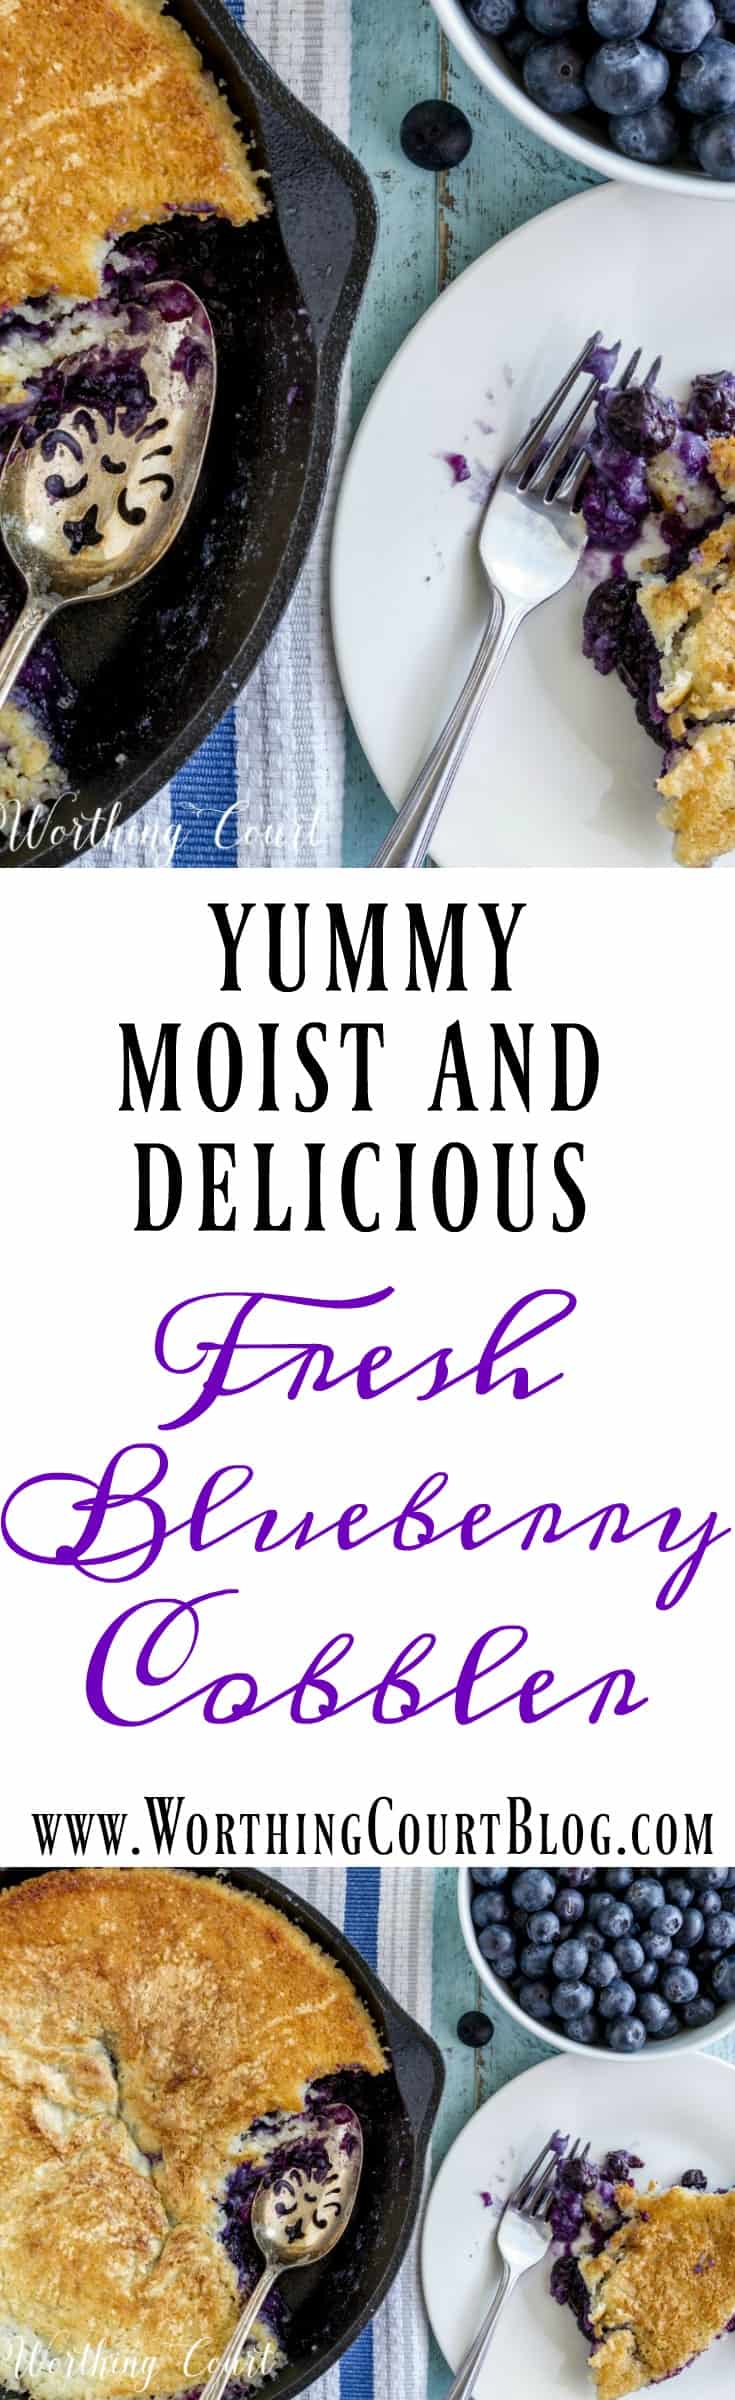 Delicious Fresh Blueberry Cobbler Recipe || Worthing Court